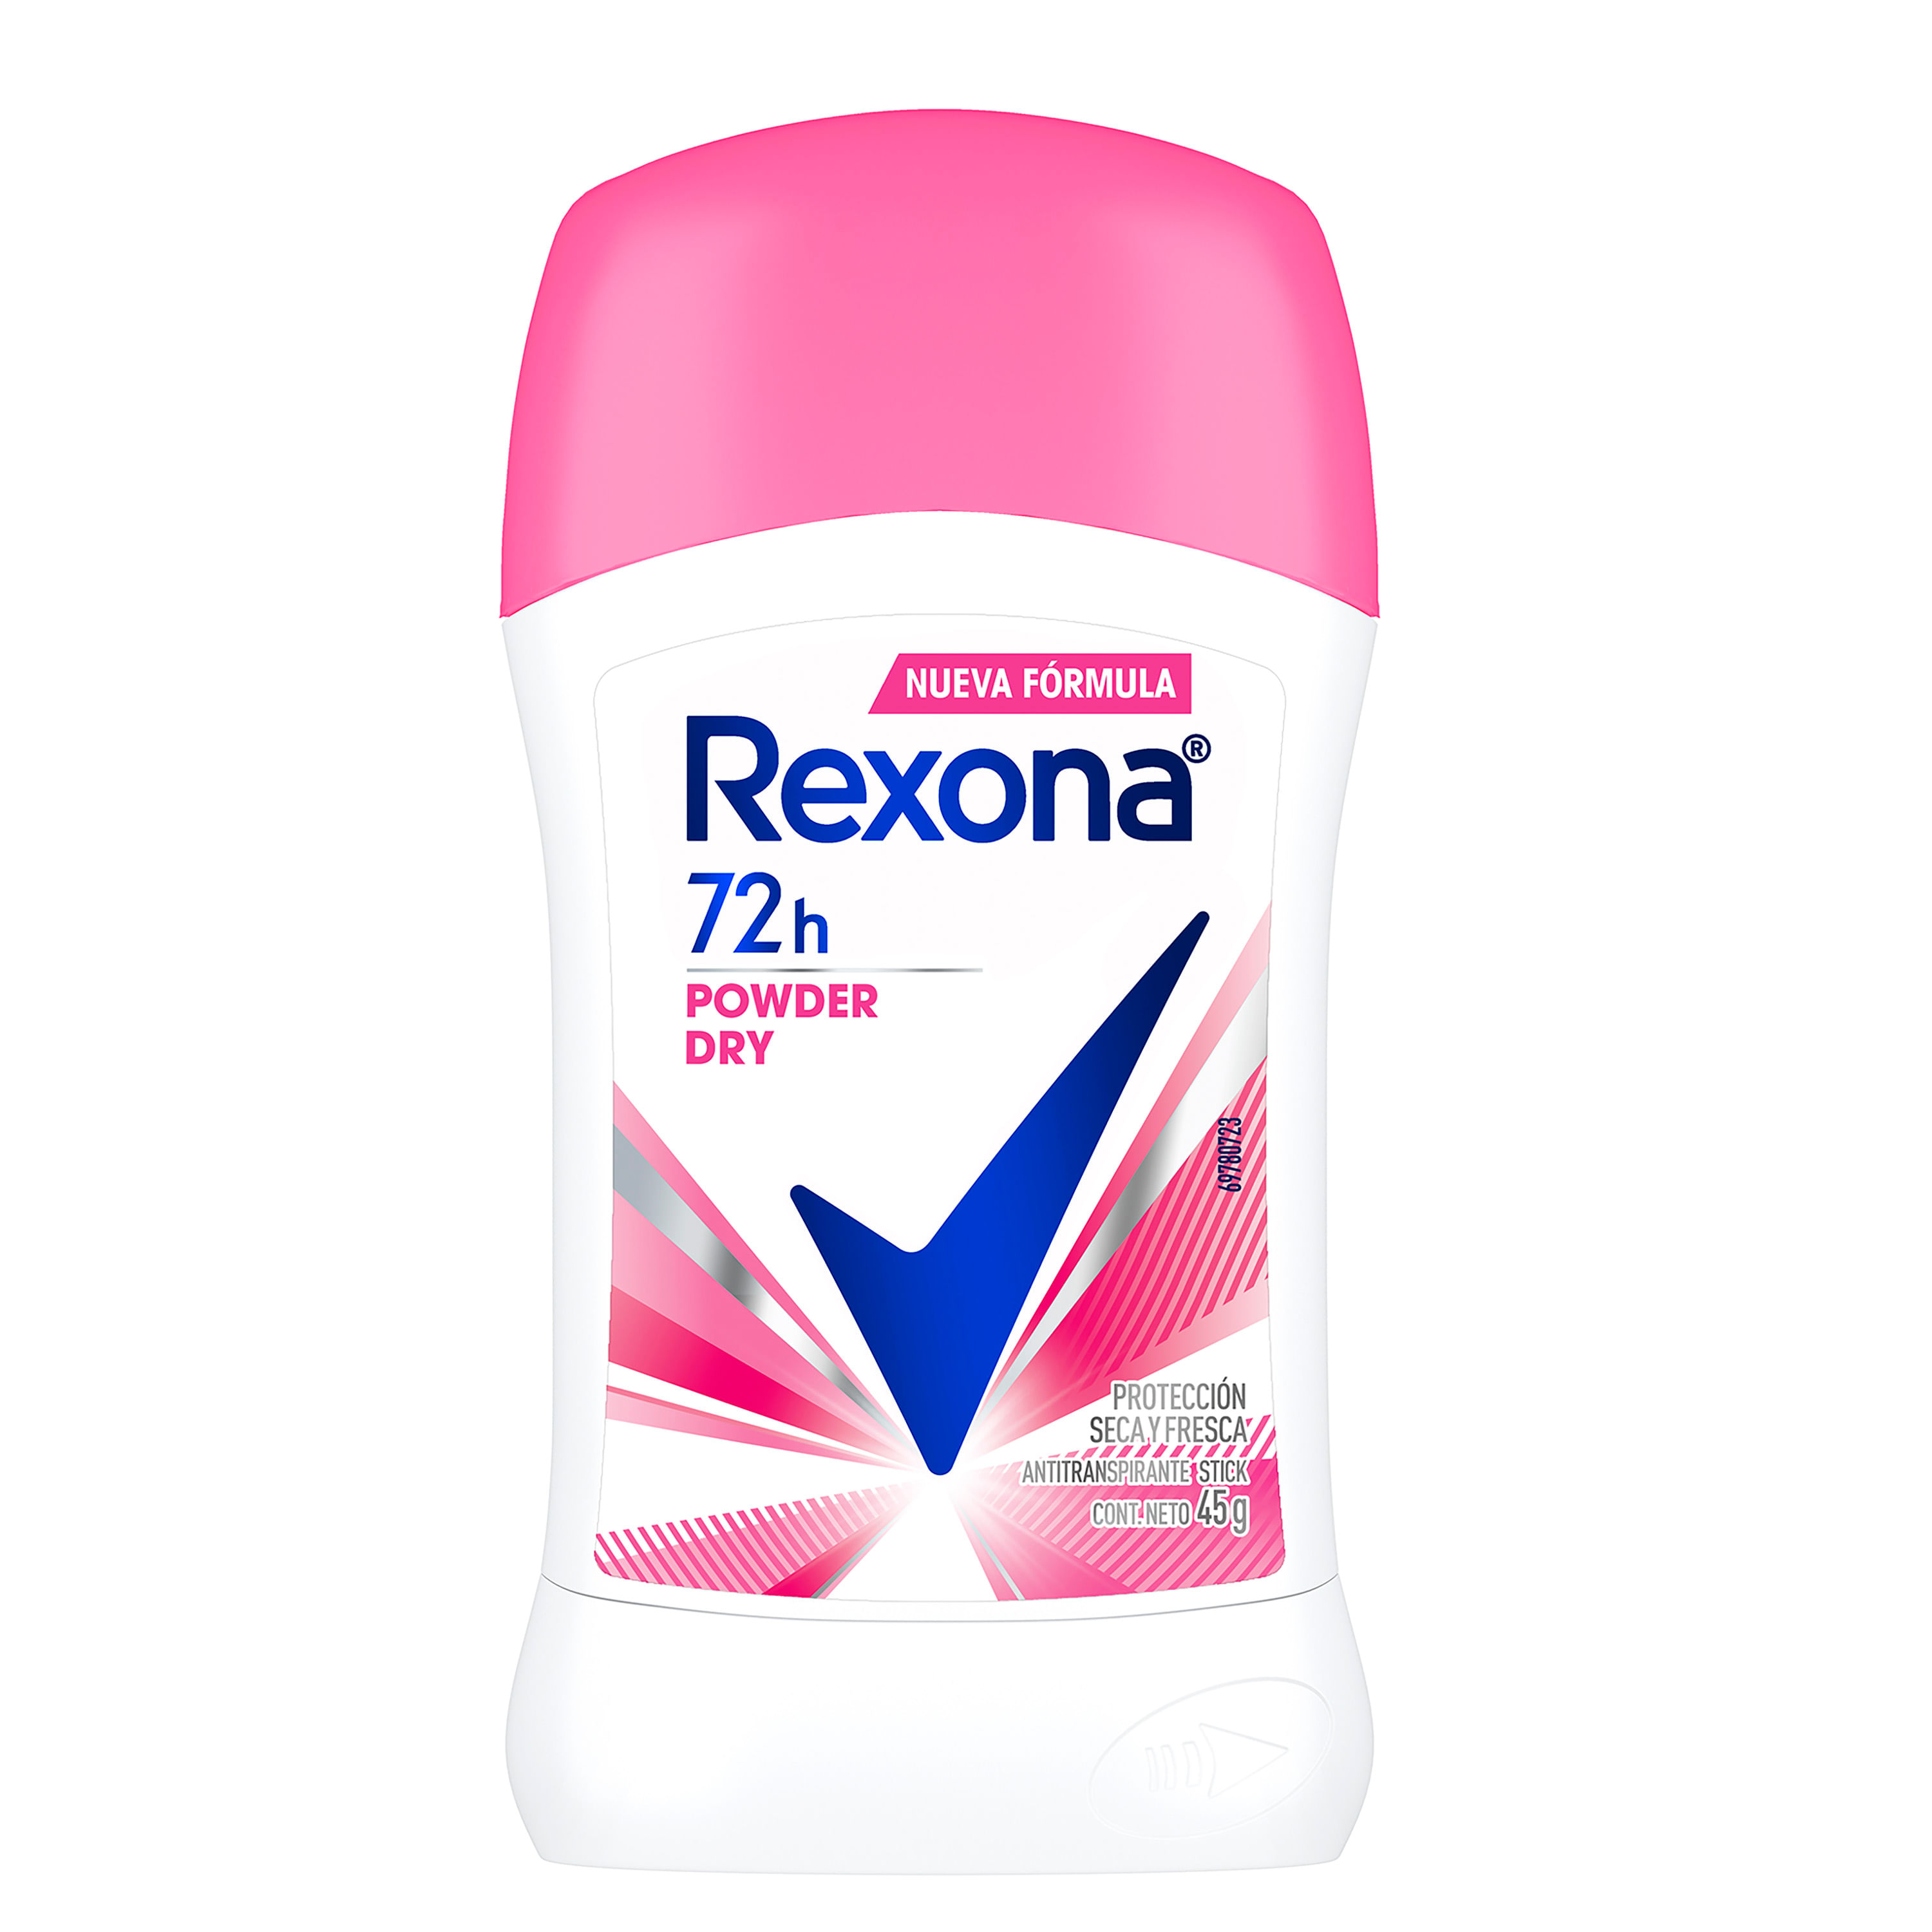 Antitranspirante Rexona® Tono Perfecto en Aerosol para Mujer 150 ml